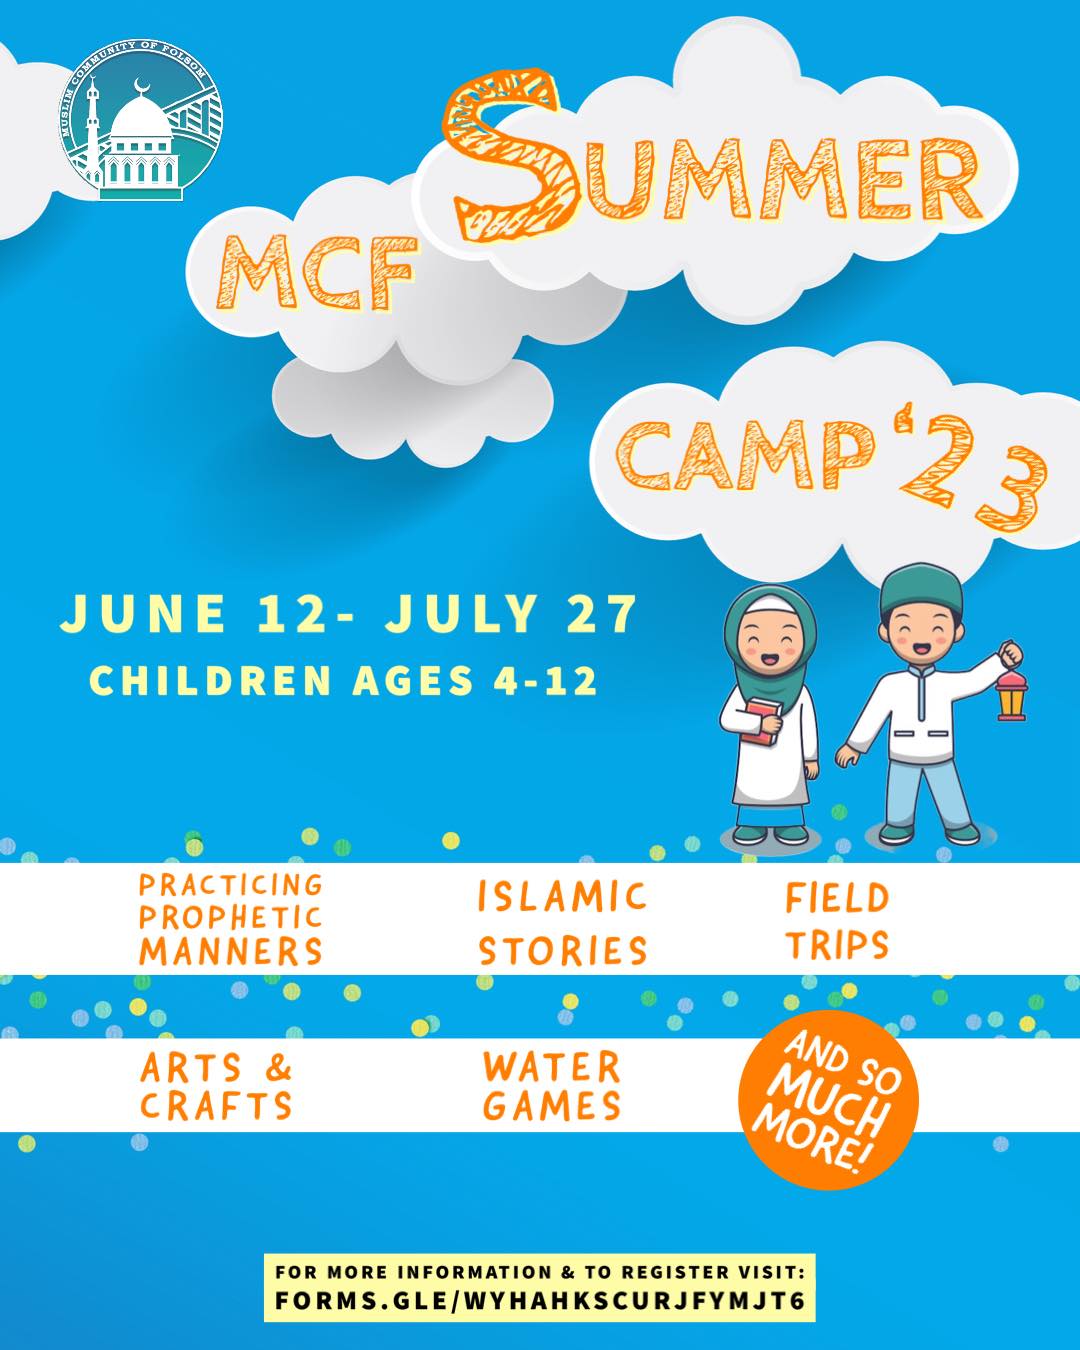 MCF Summer Camp 23, Folsom, CA